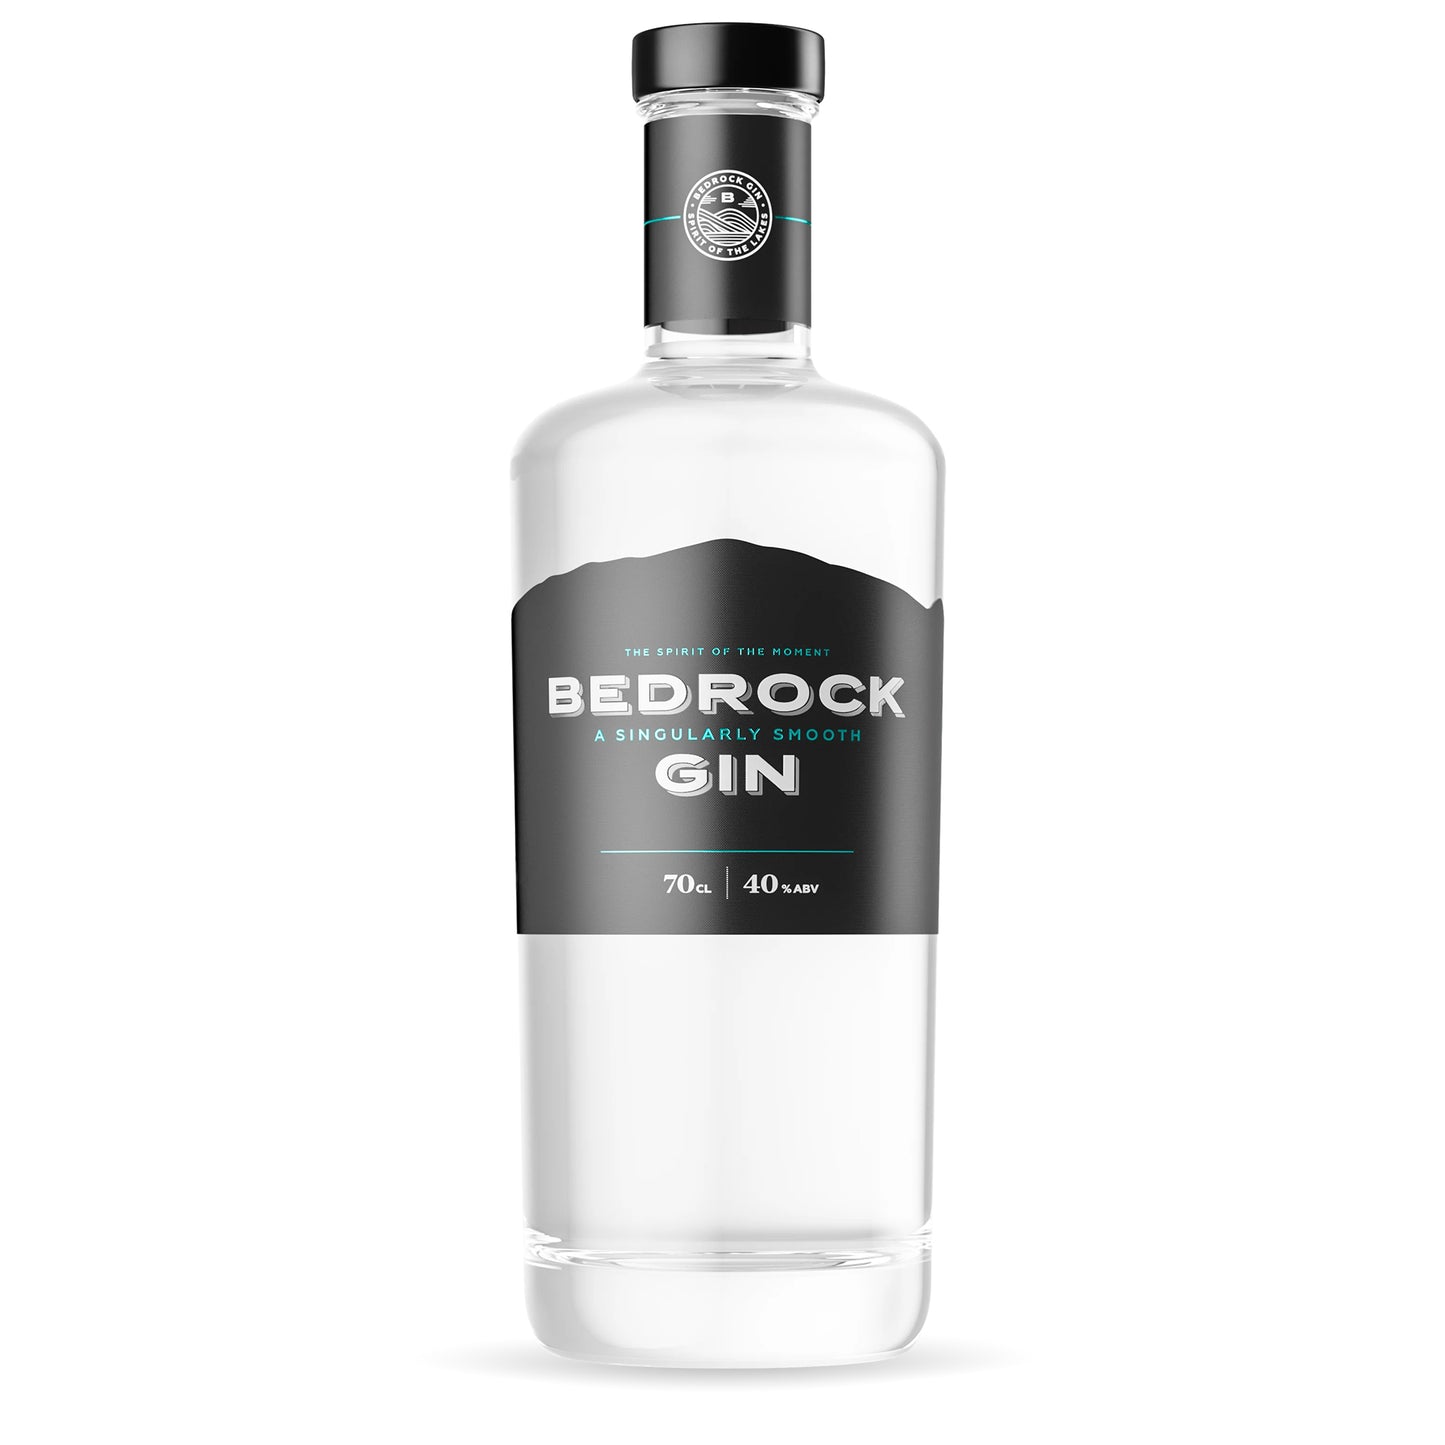 Bedrock Gin - Bedrock Gin Original Strength London Dry Gin 40% ABV